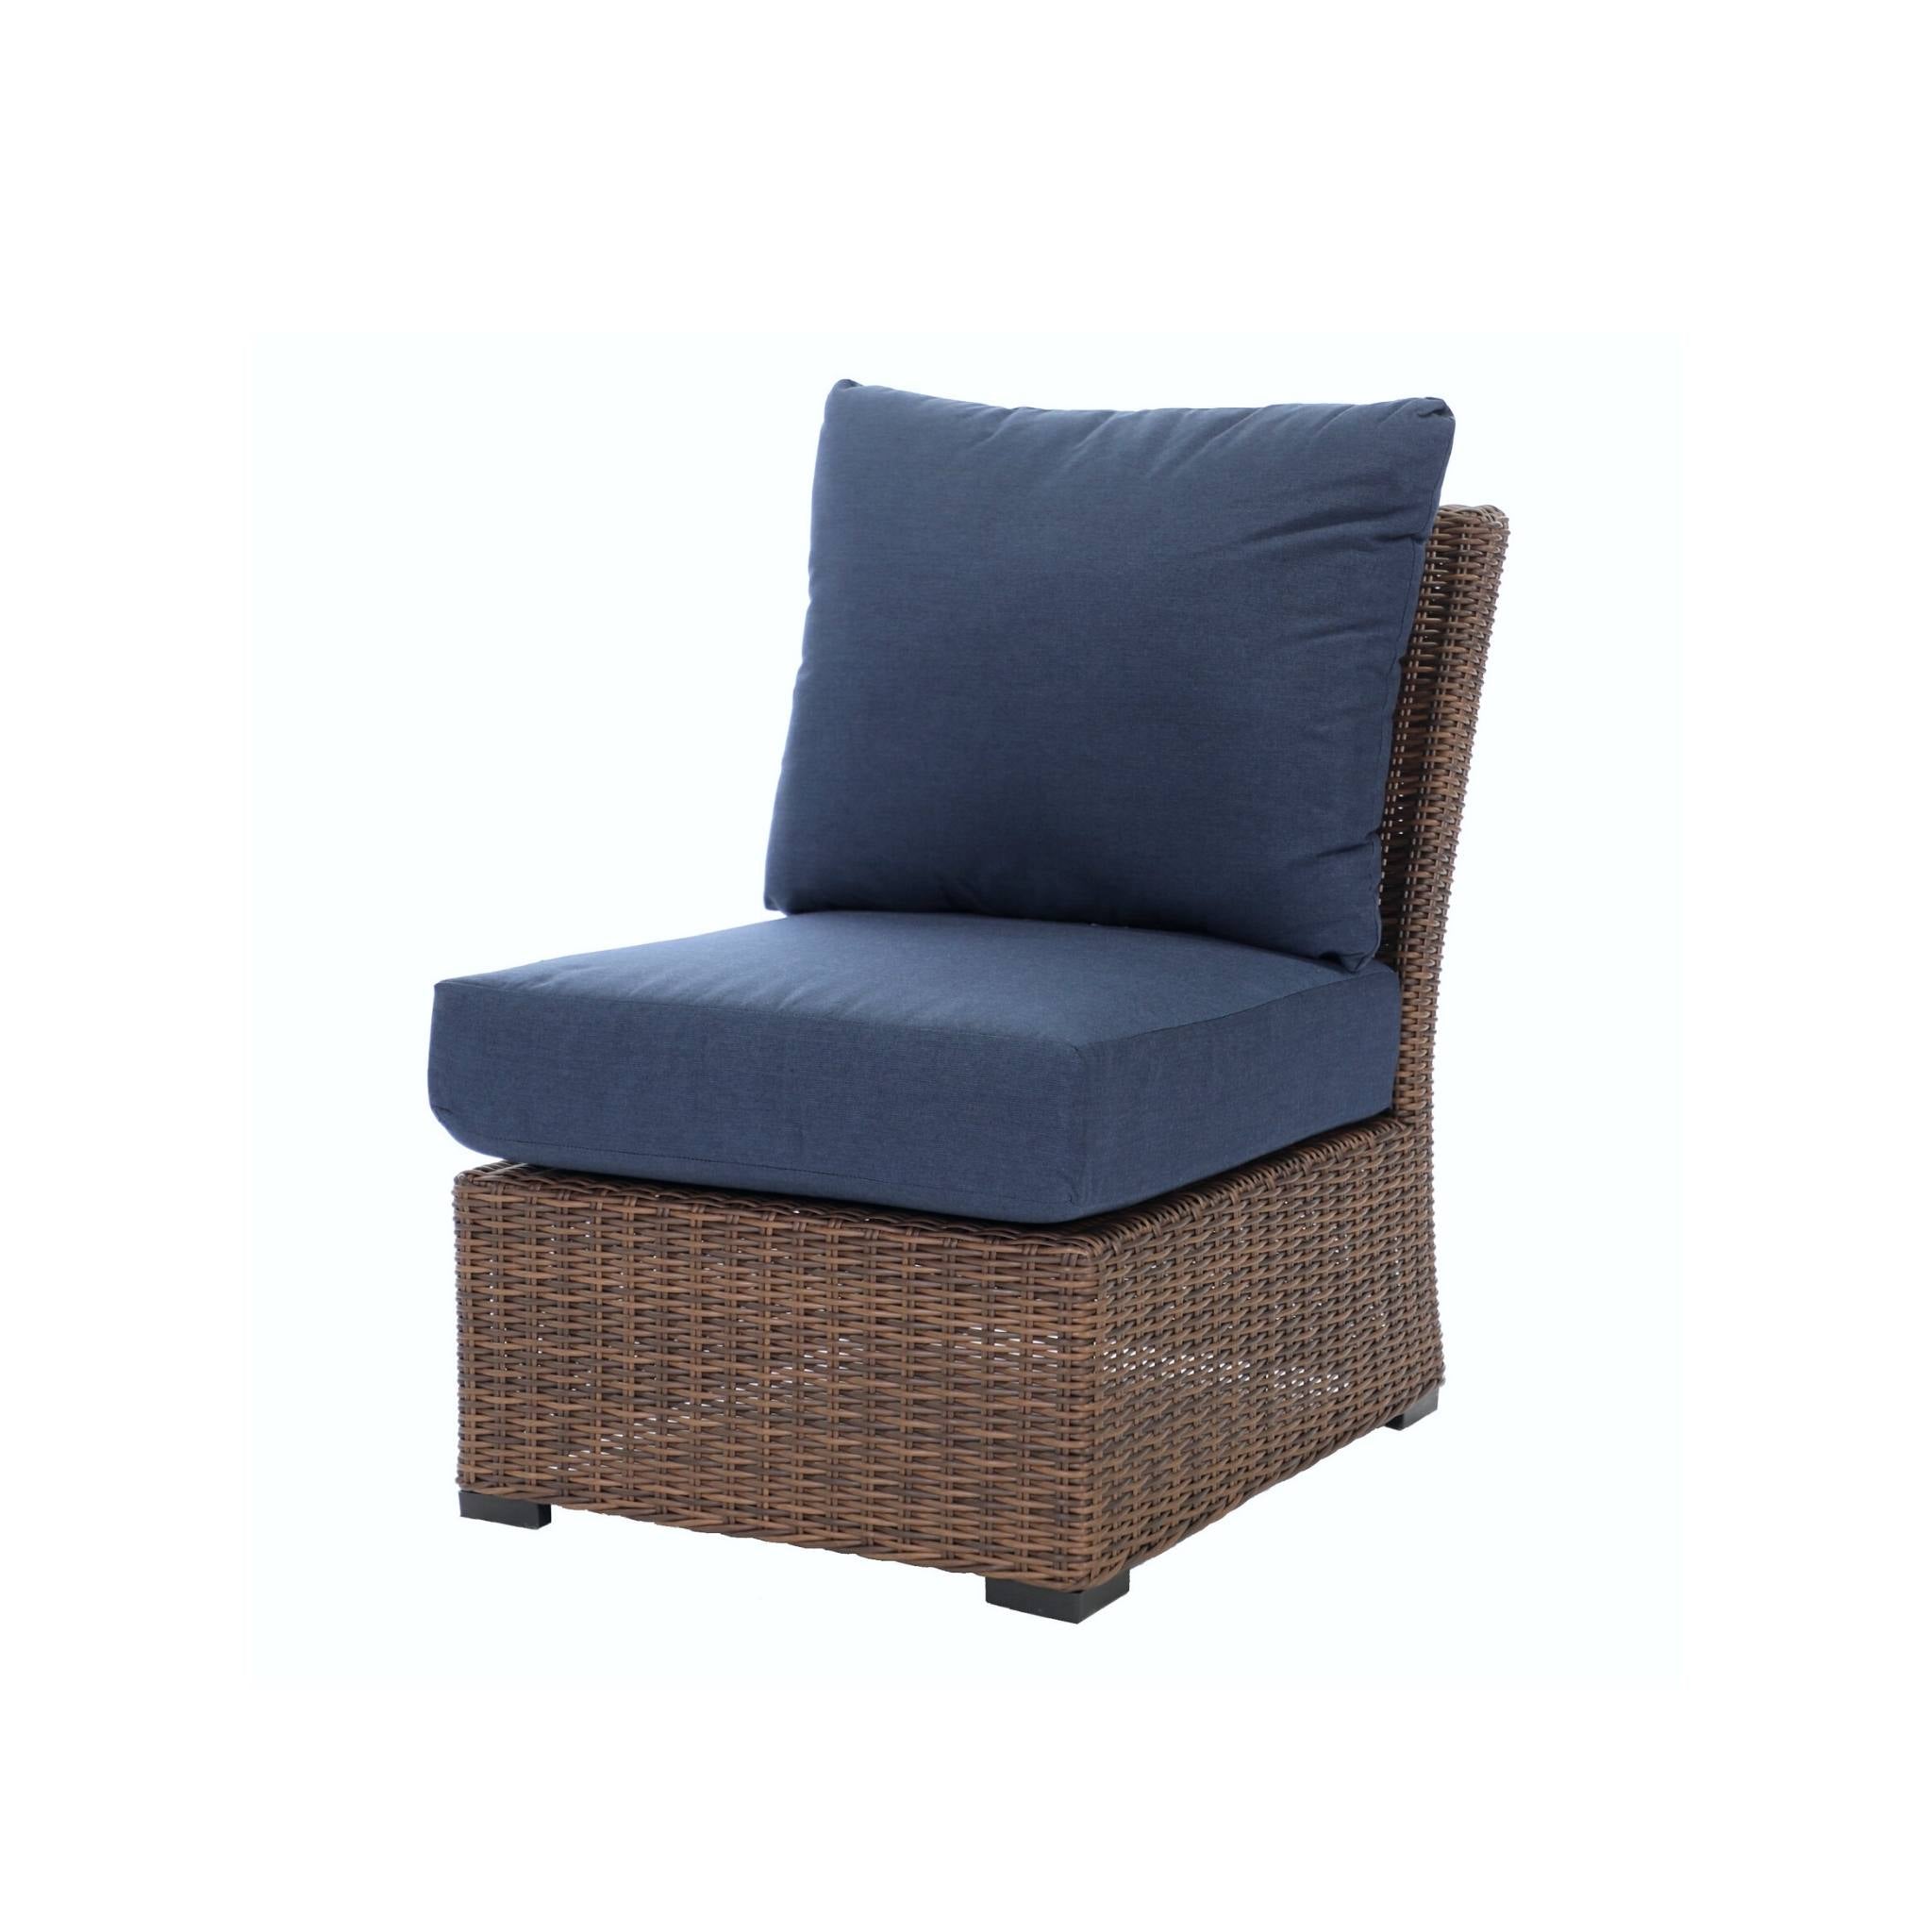 Campden Outdoor Chair